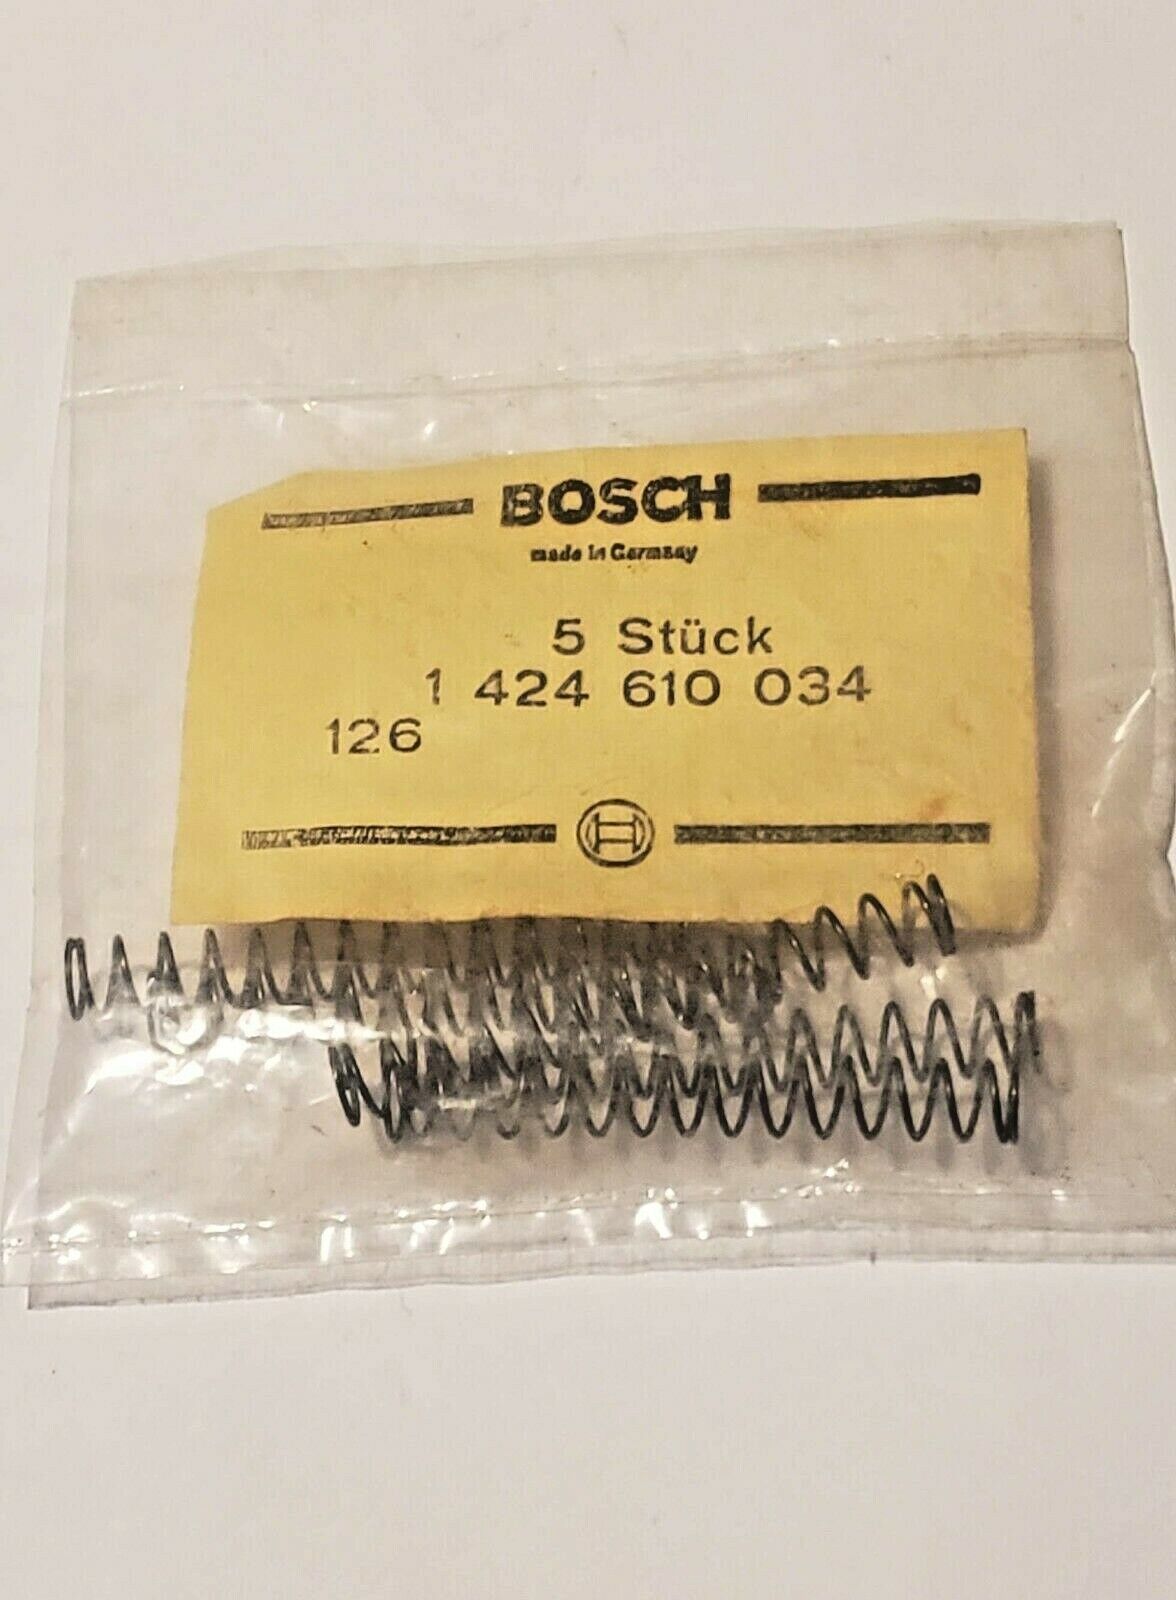 BOSCH 1424610034 Injection pump springs pack of 5 springs.